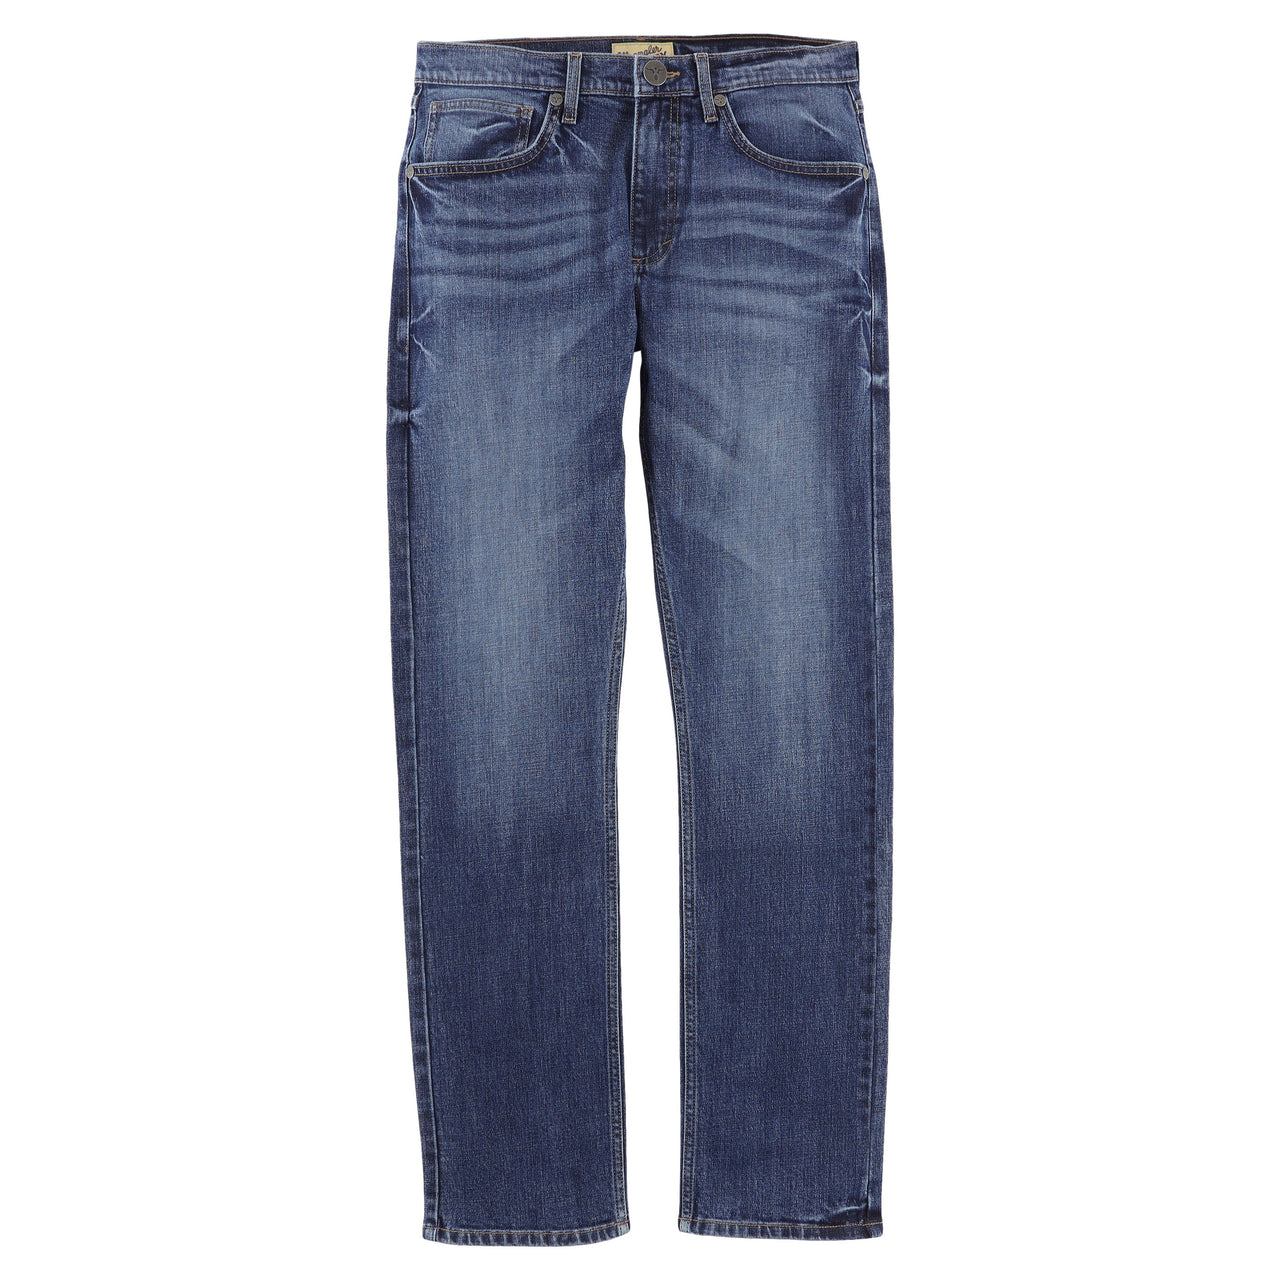 Wrangler Men's 20X 44 Slim Straight Jeans - Carlson